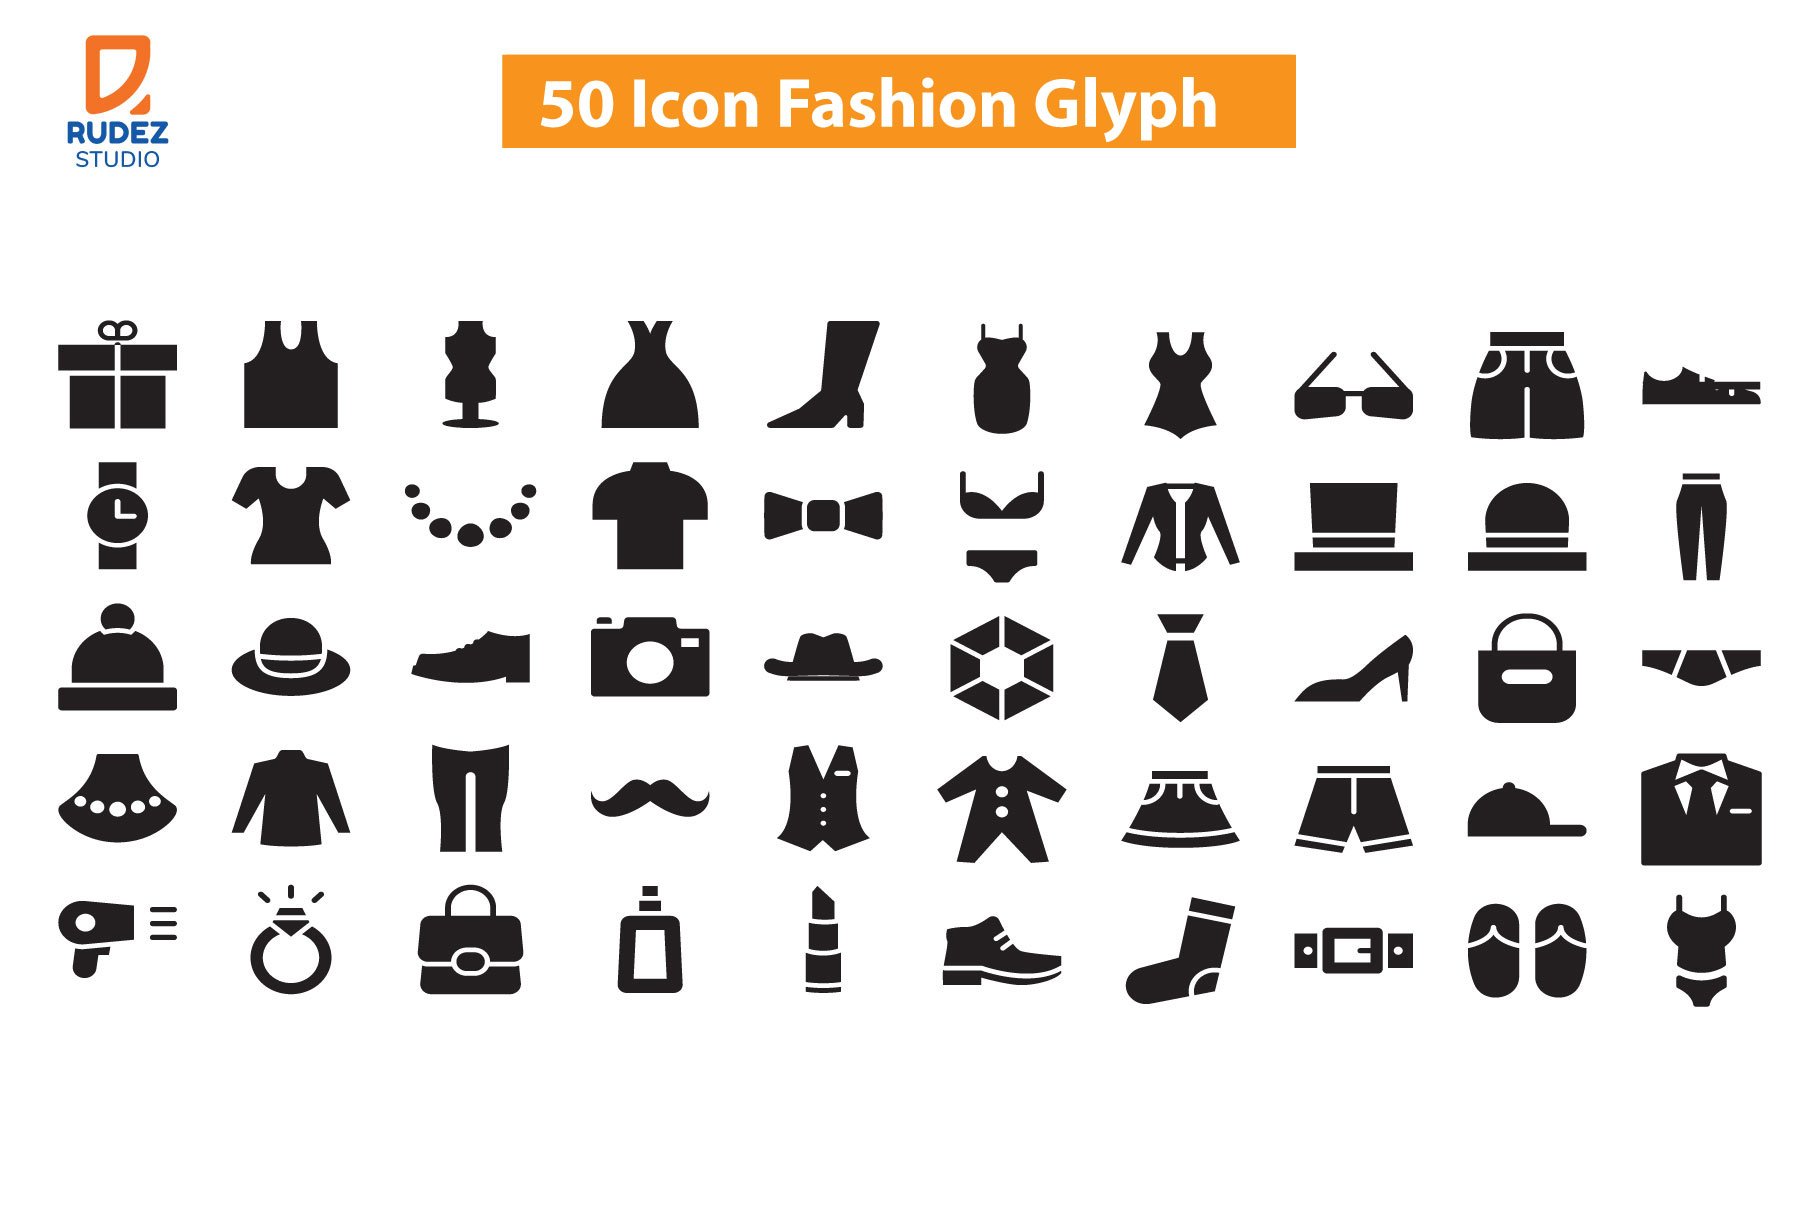 Fashion Glyph cover image.